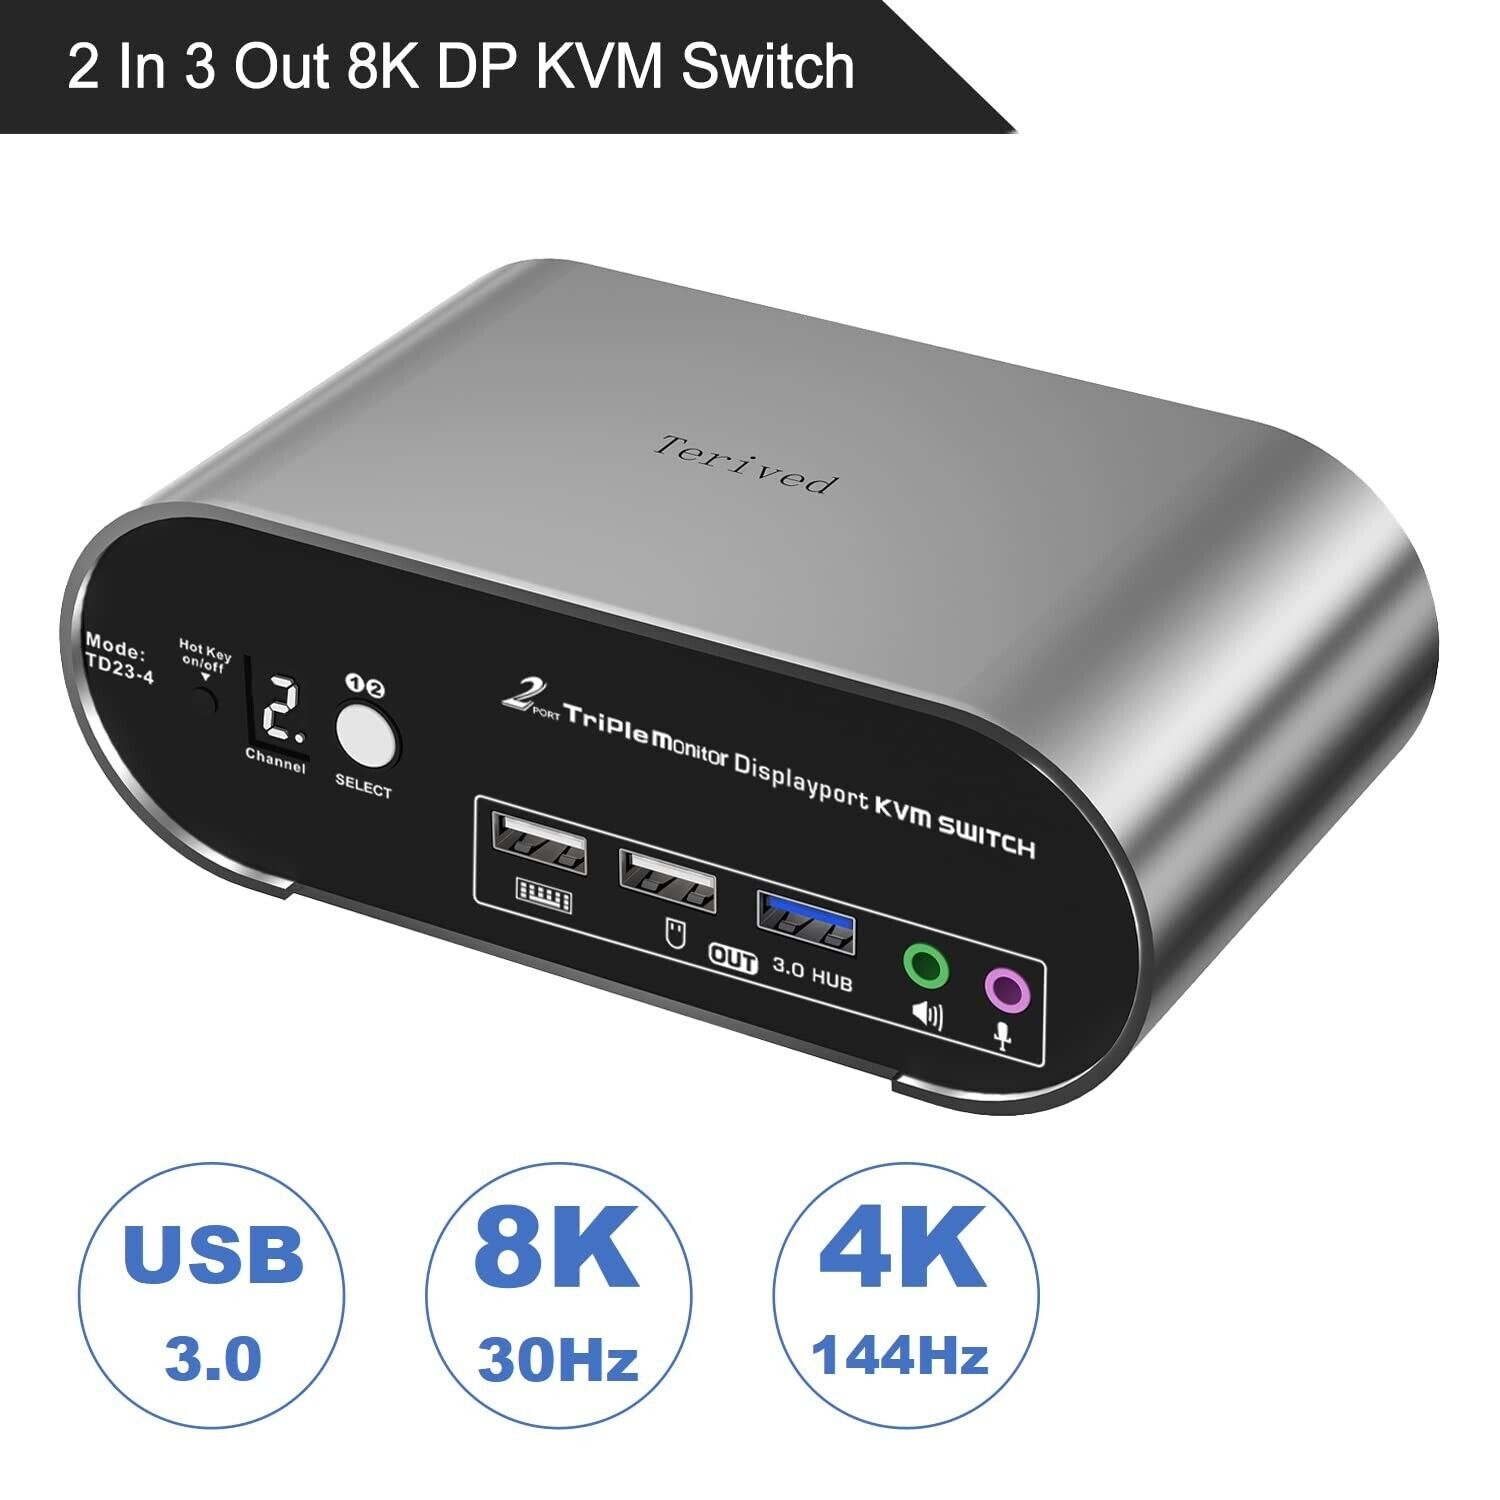 Terived 2 Port DP USB 3.0 KVM Switch Triple Monitor Setup (TD23-4) MSRP - $400